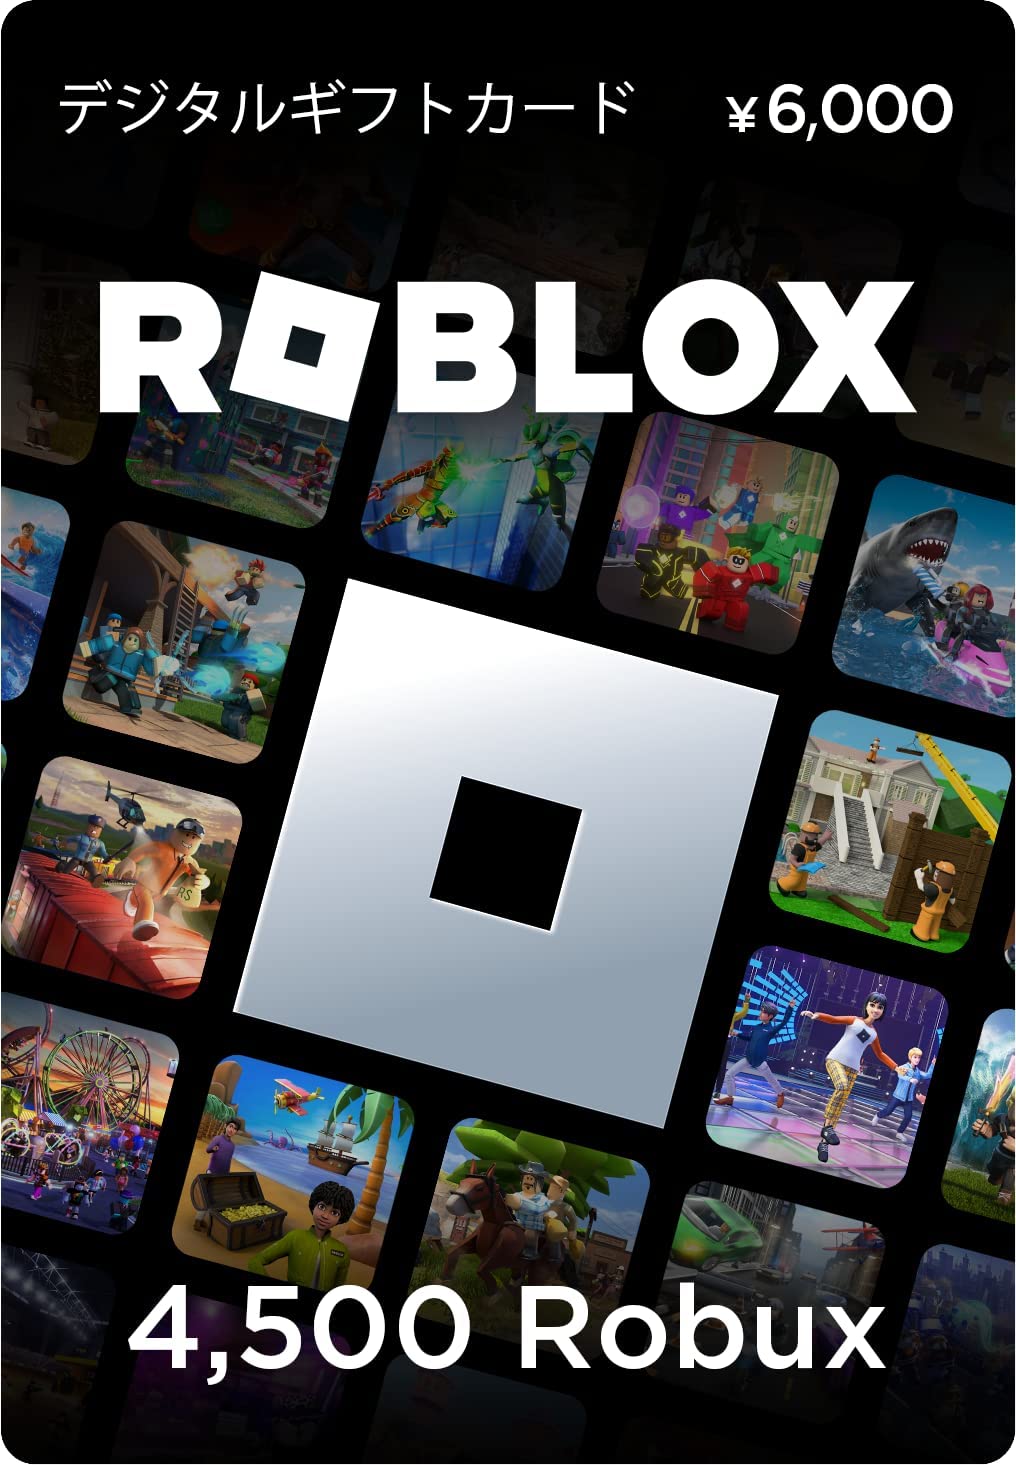 FREE Roblox Game Card